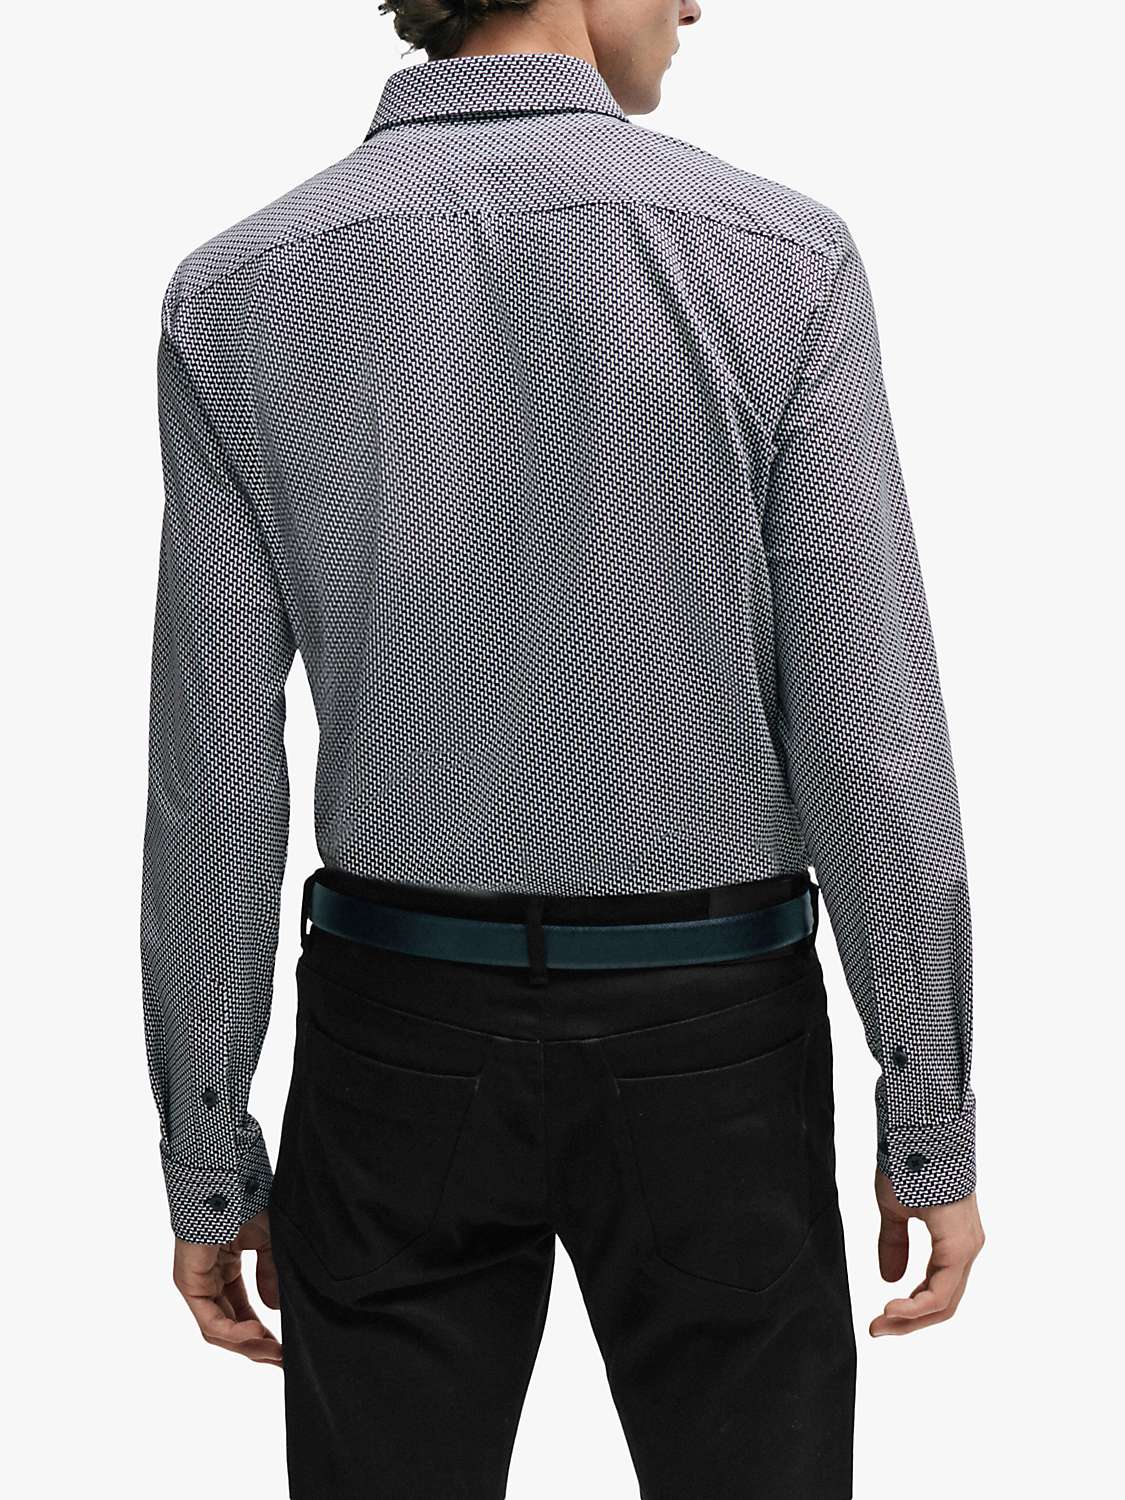 Buy BOSS Roan Kent Shirt, Black Online at johnlewis.com